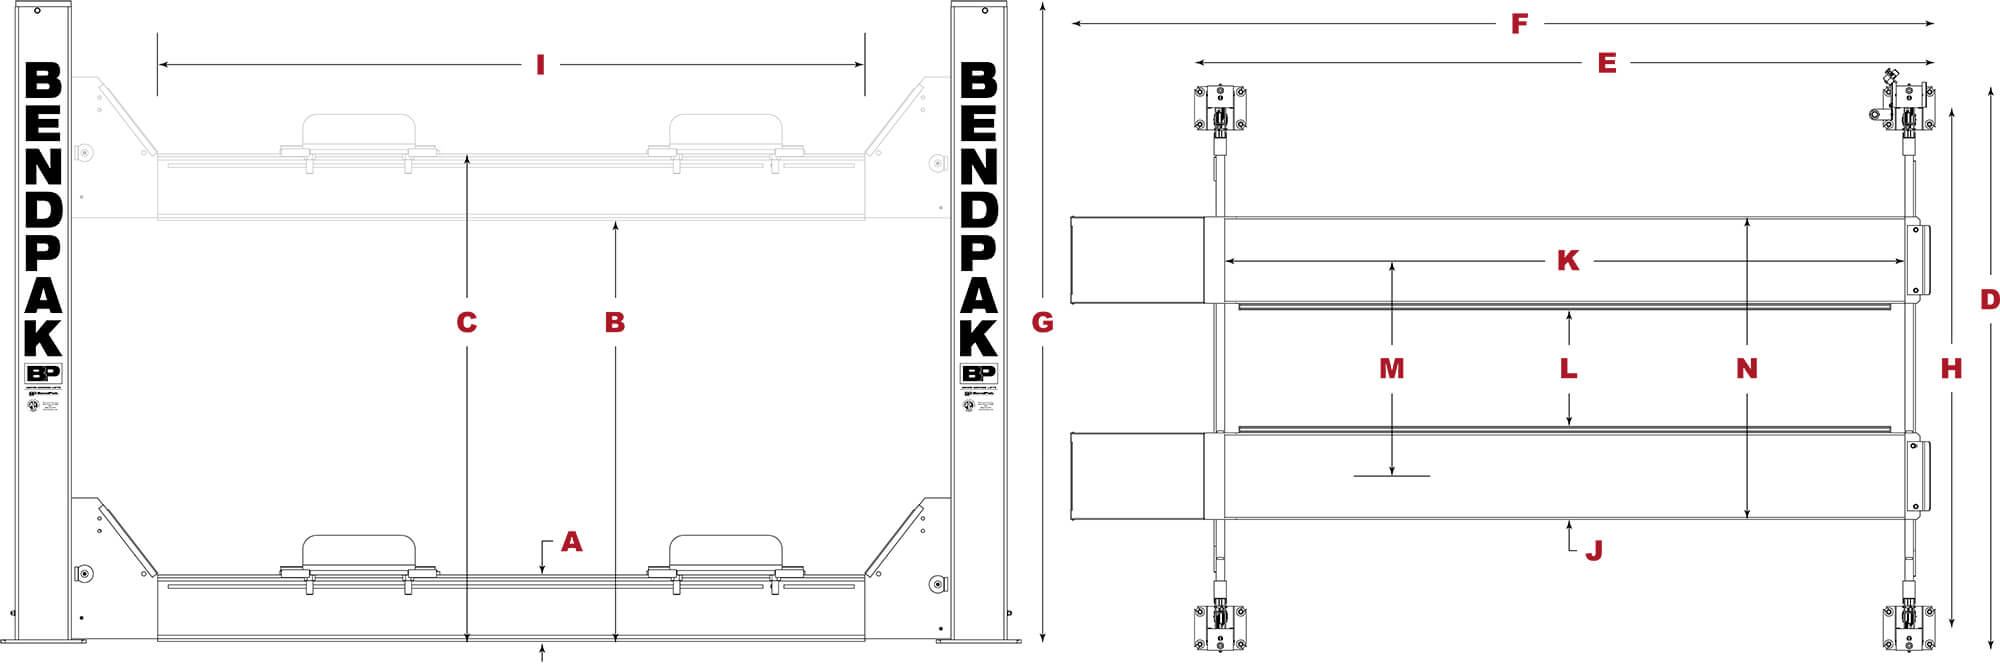 bendpak-hds-40x-heavy-duty-four-post-lift-specifications-diagram.jpg